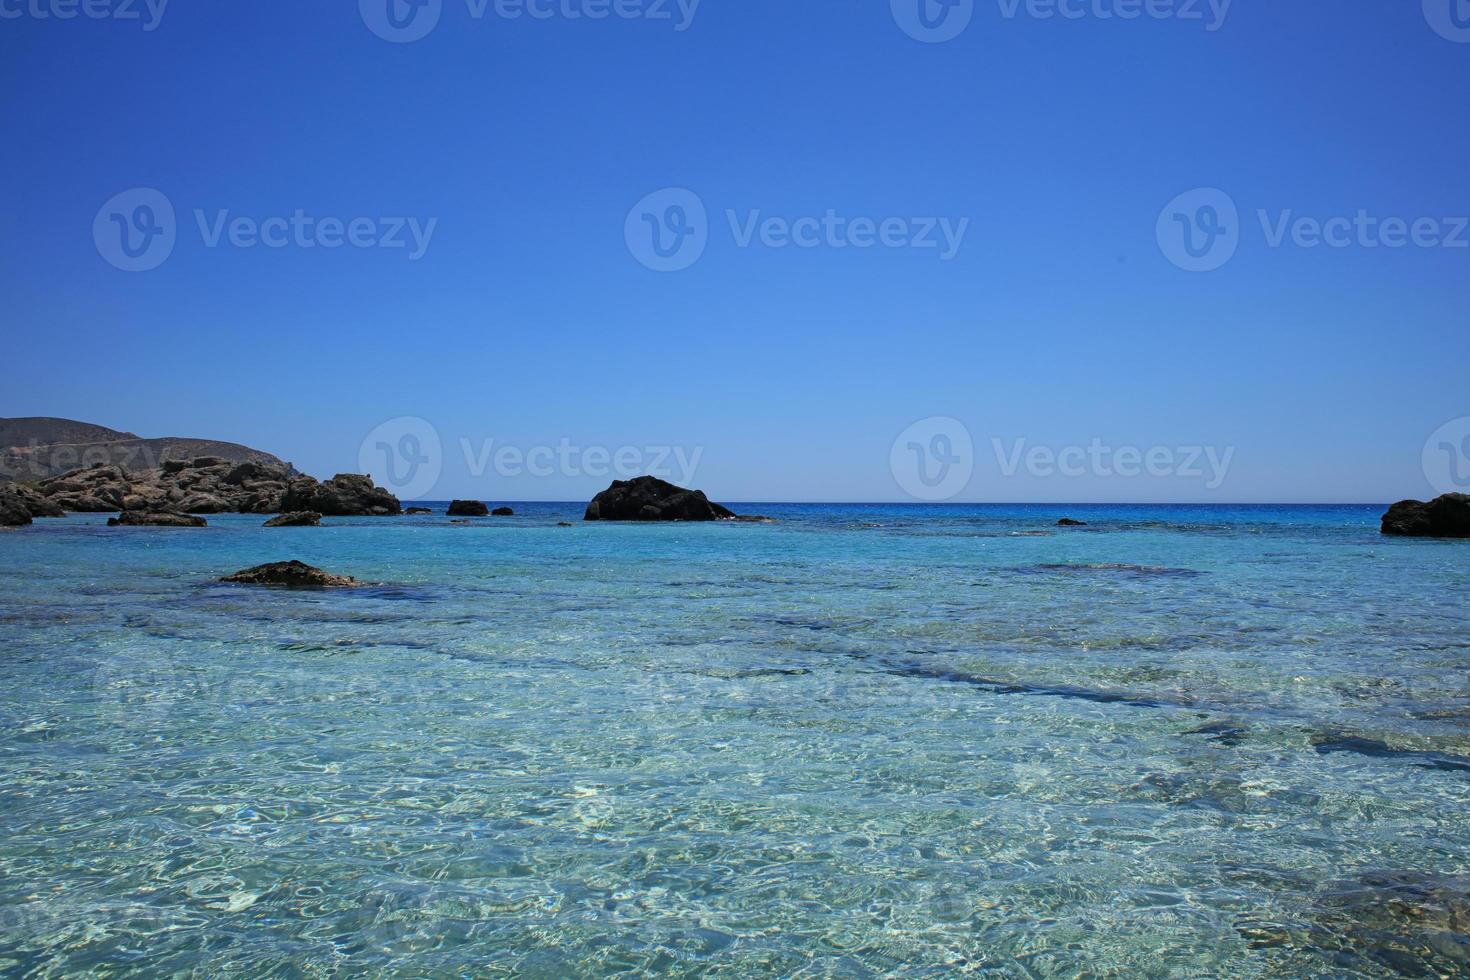 Kedrodasos beach creta island blue lagoon crystal waters and corals photo